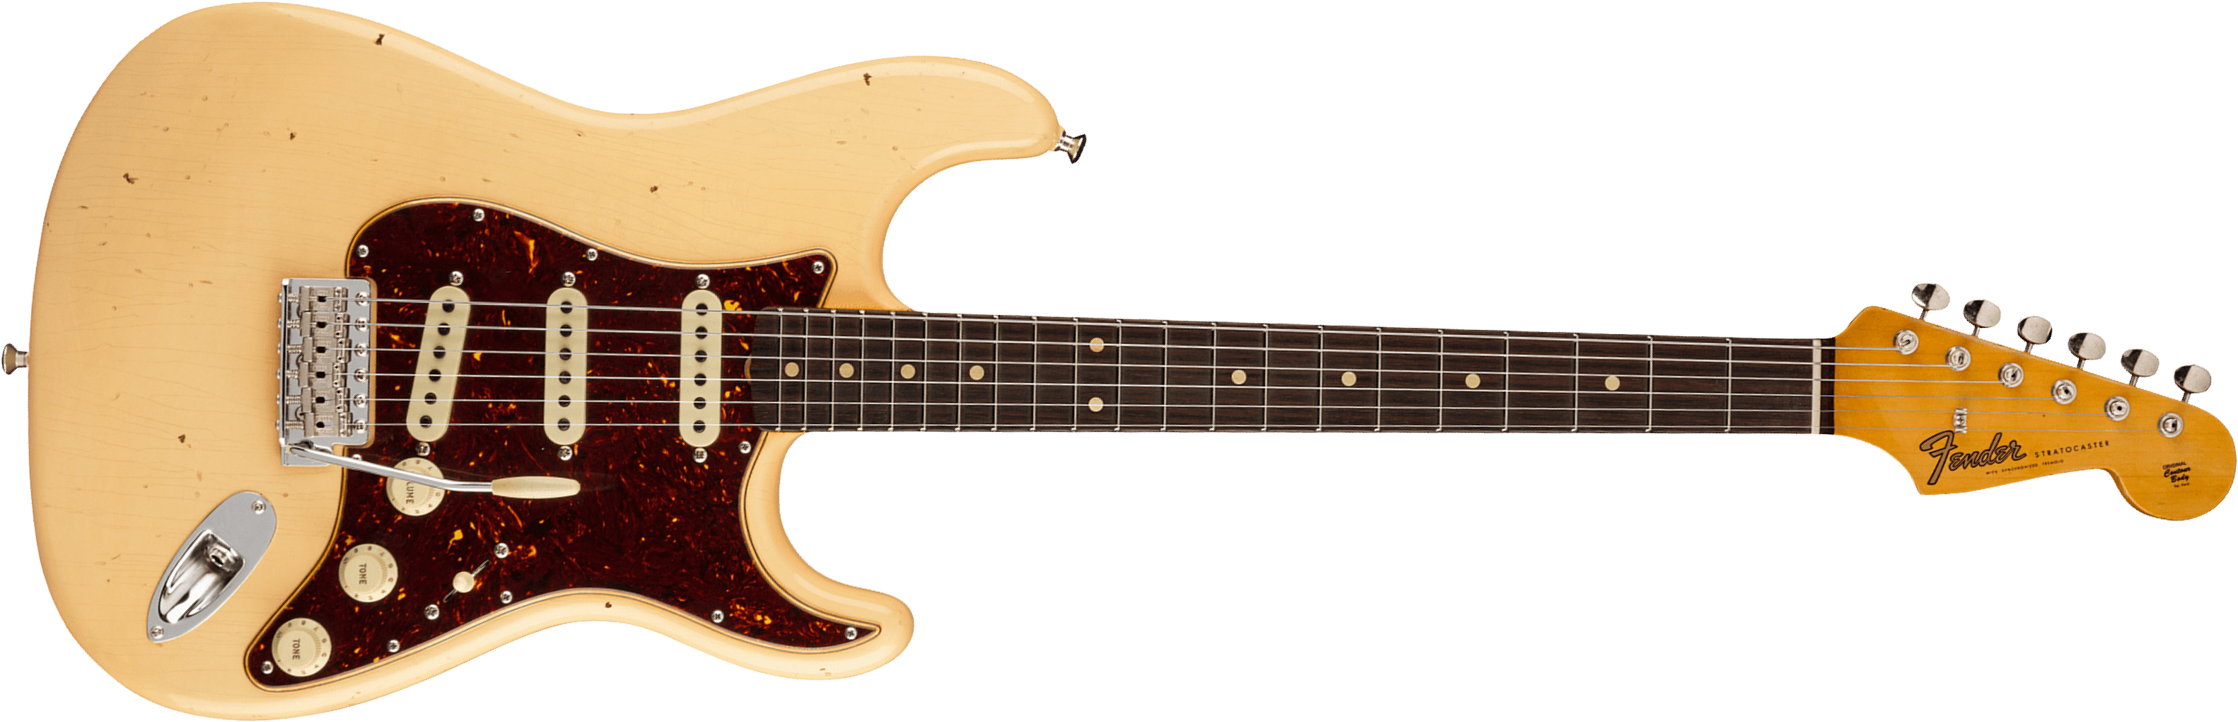 Fender Custom Shop Strat Postmodern Usa Rw - Journeyman Relic Vintage White - E-Gitarre in Str-Form - Main picture